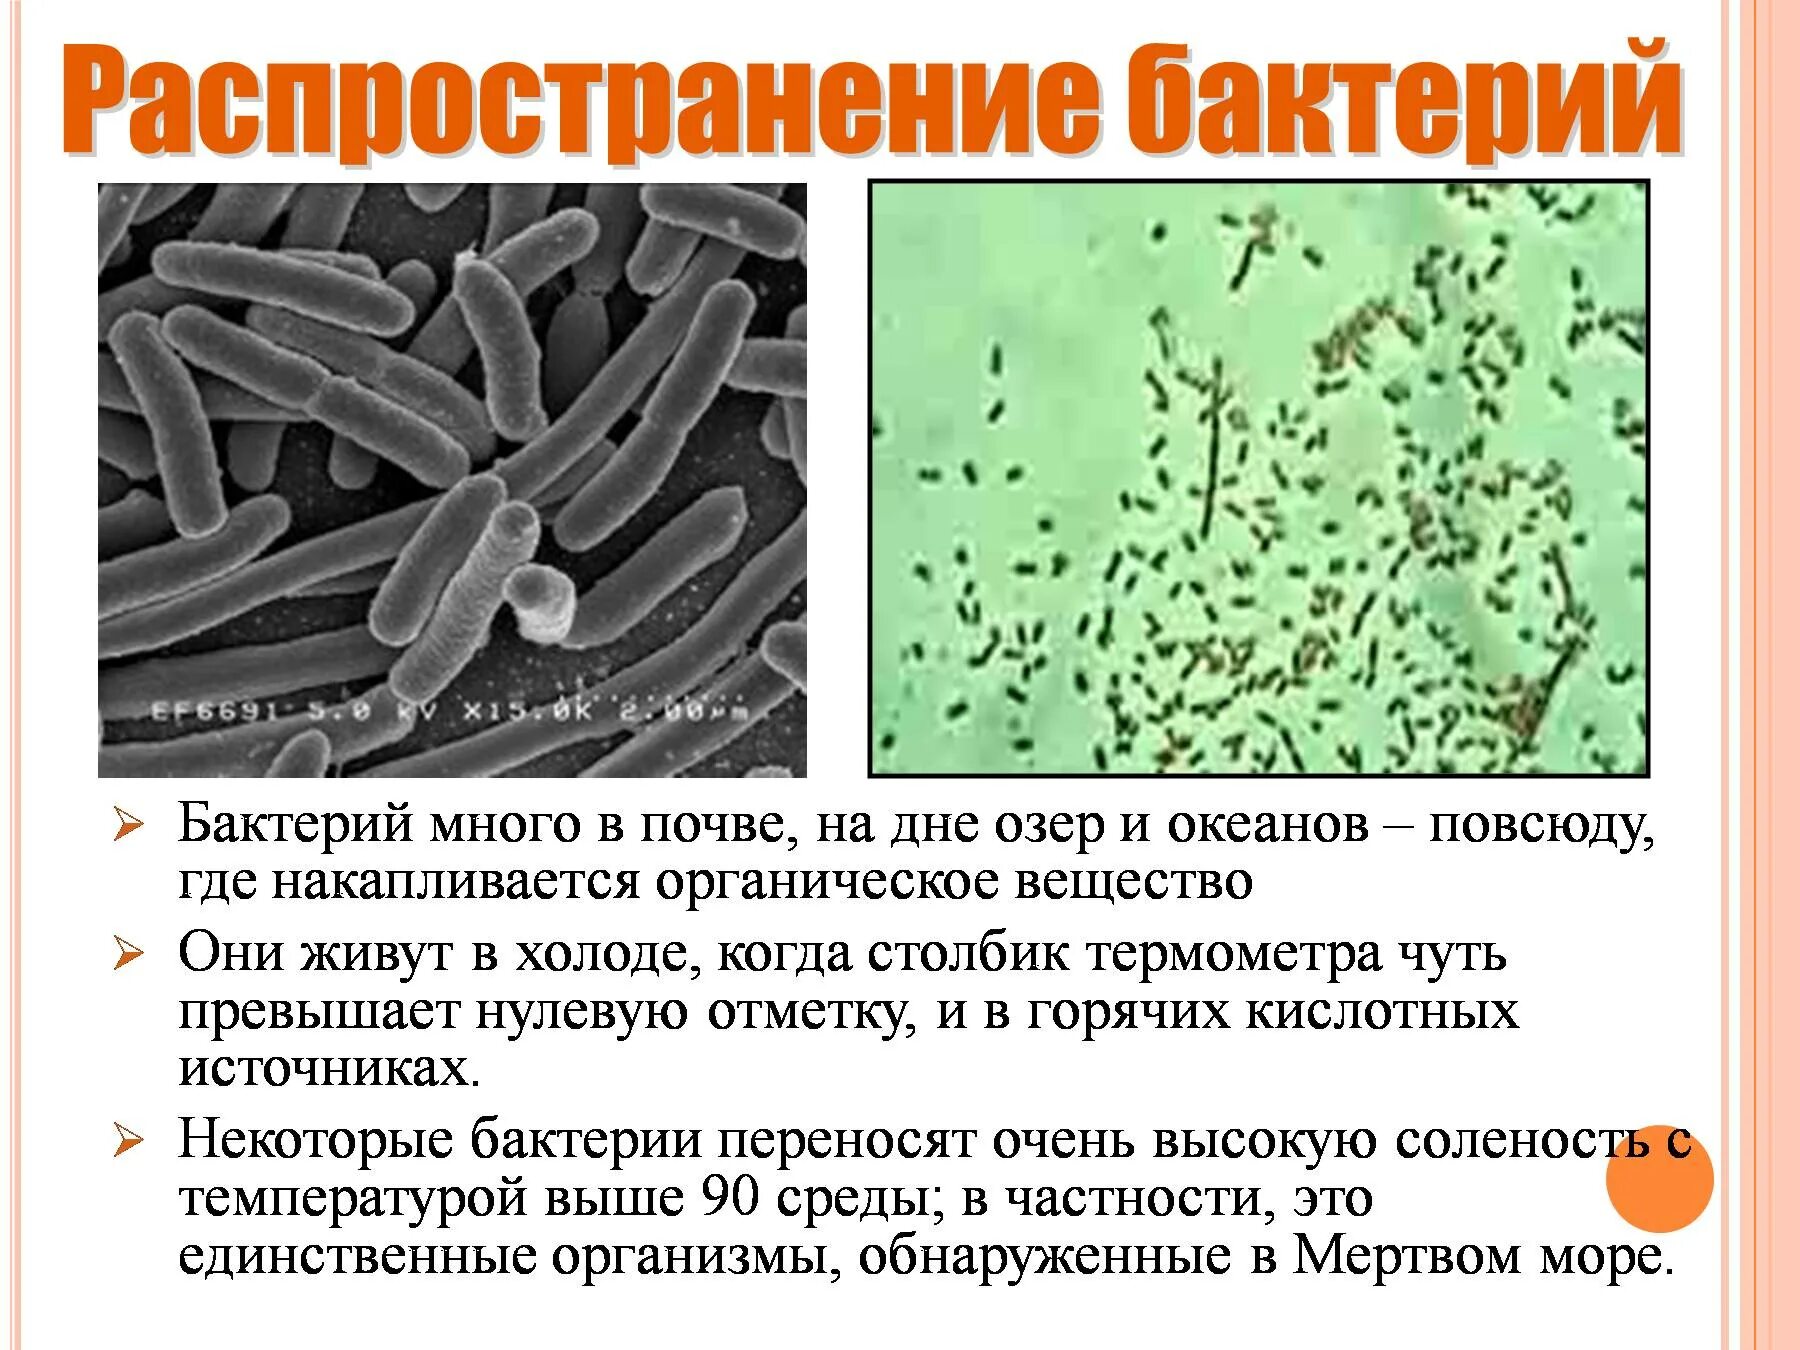 Биологии бактерии 9. Царство бактерий 5 класс биология. Представители царства бактерий 5 класс. Характеристика царства бактерий 5 класс. Характеристика бактерий 5 класс биология.